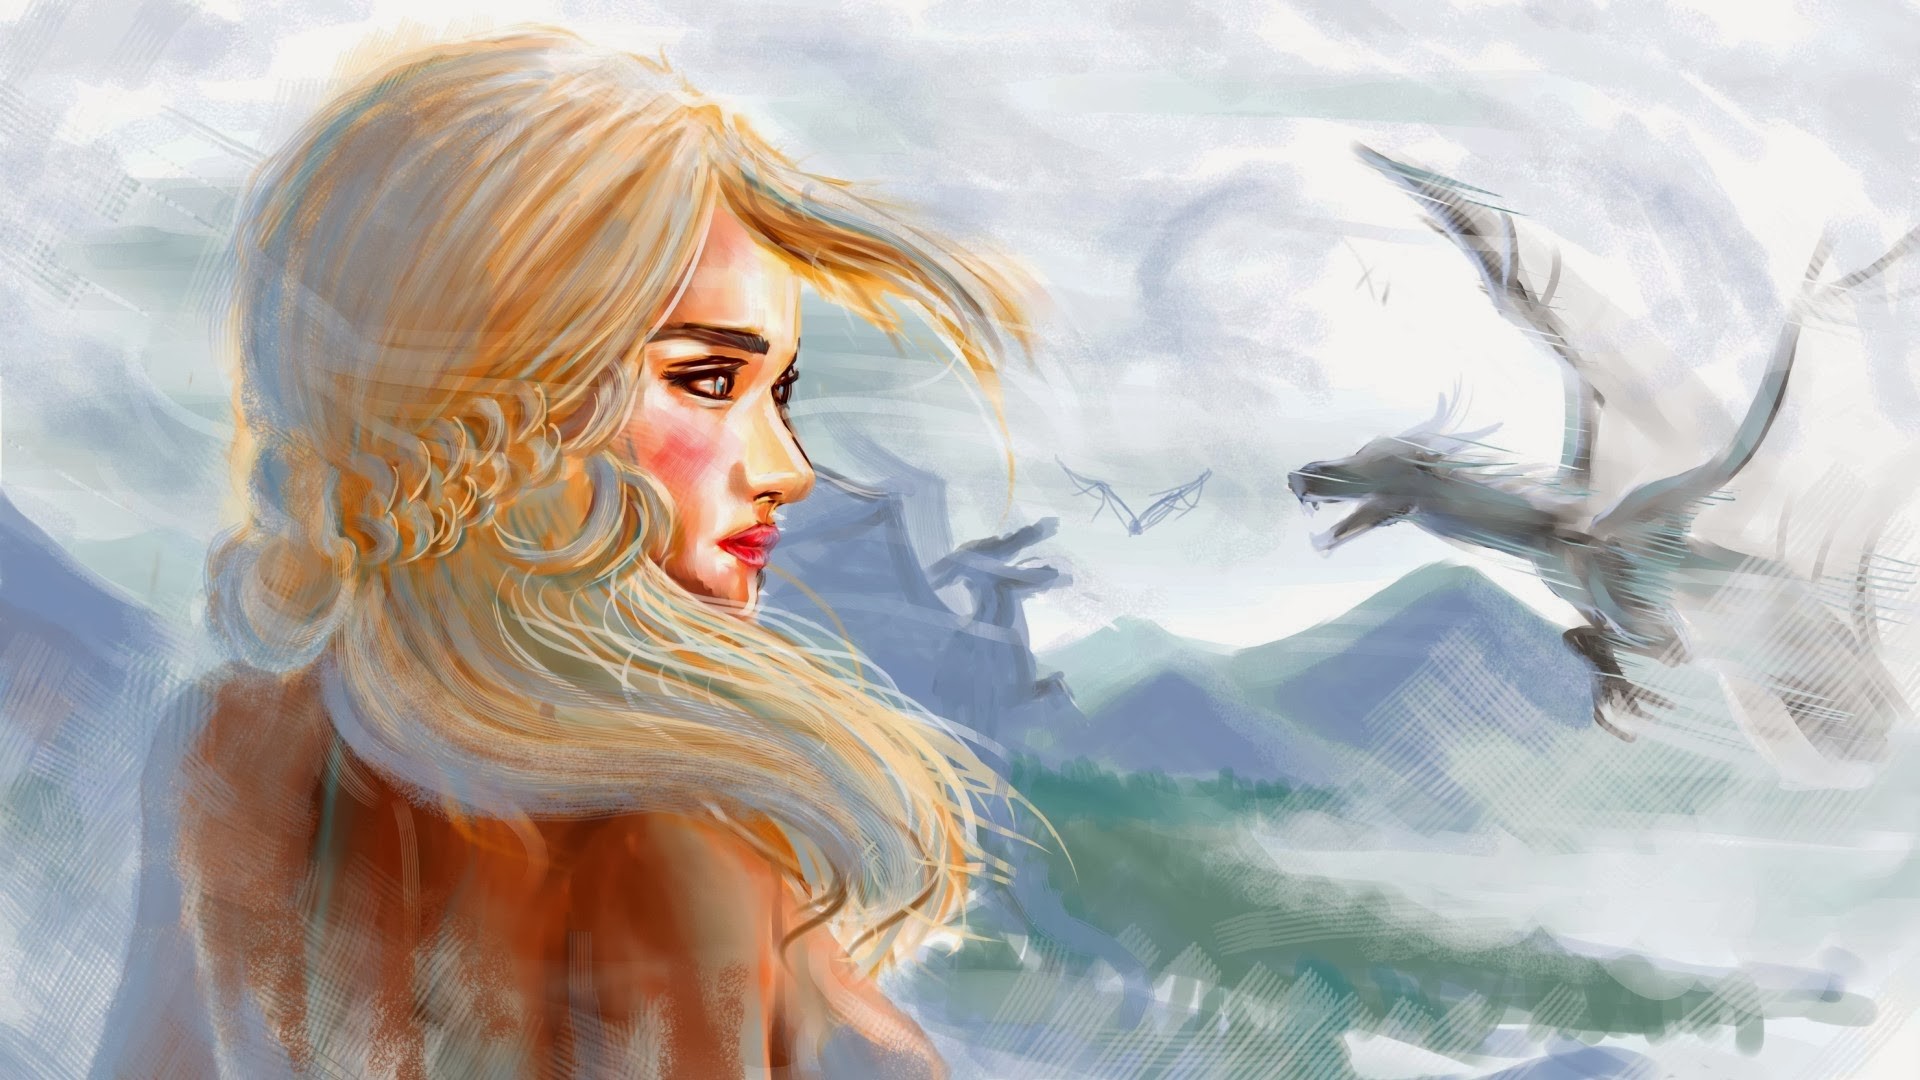 General 1920x1080 artwork dragon Game of Thrones fan art fantasy art TV series women fantasy girl Daenerys Targaryen creature blonde long hair red lipstick